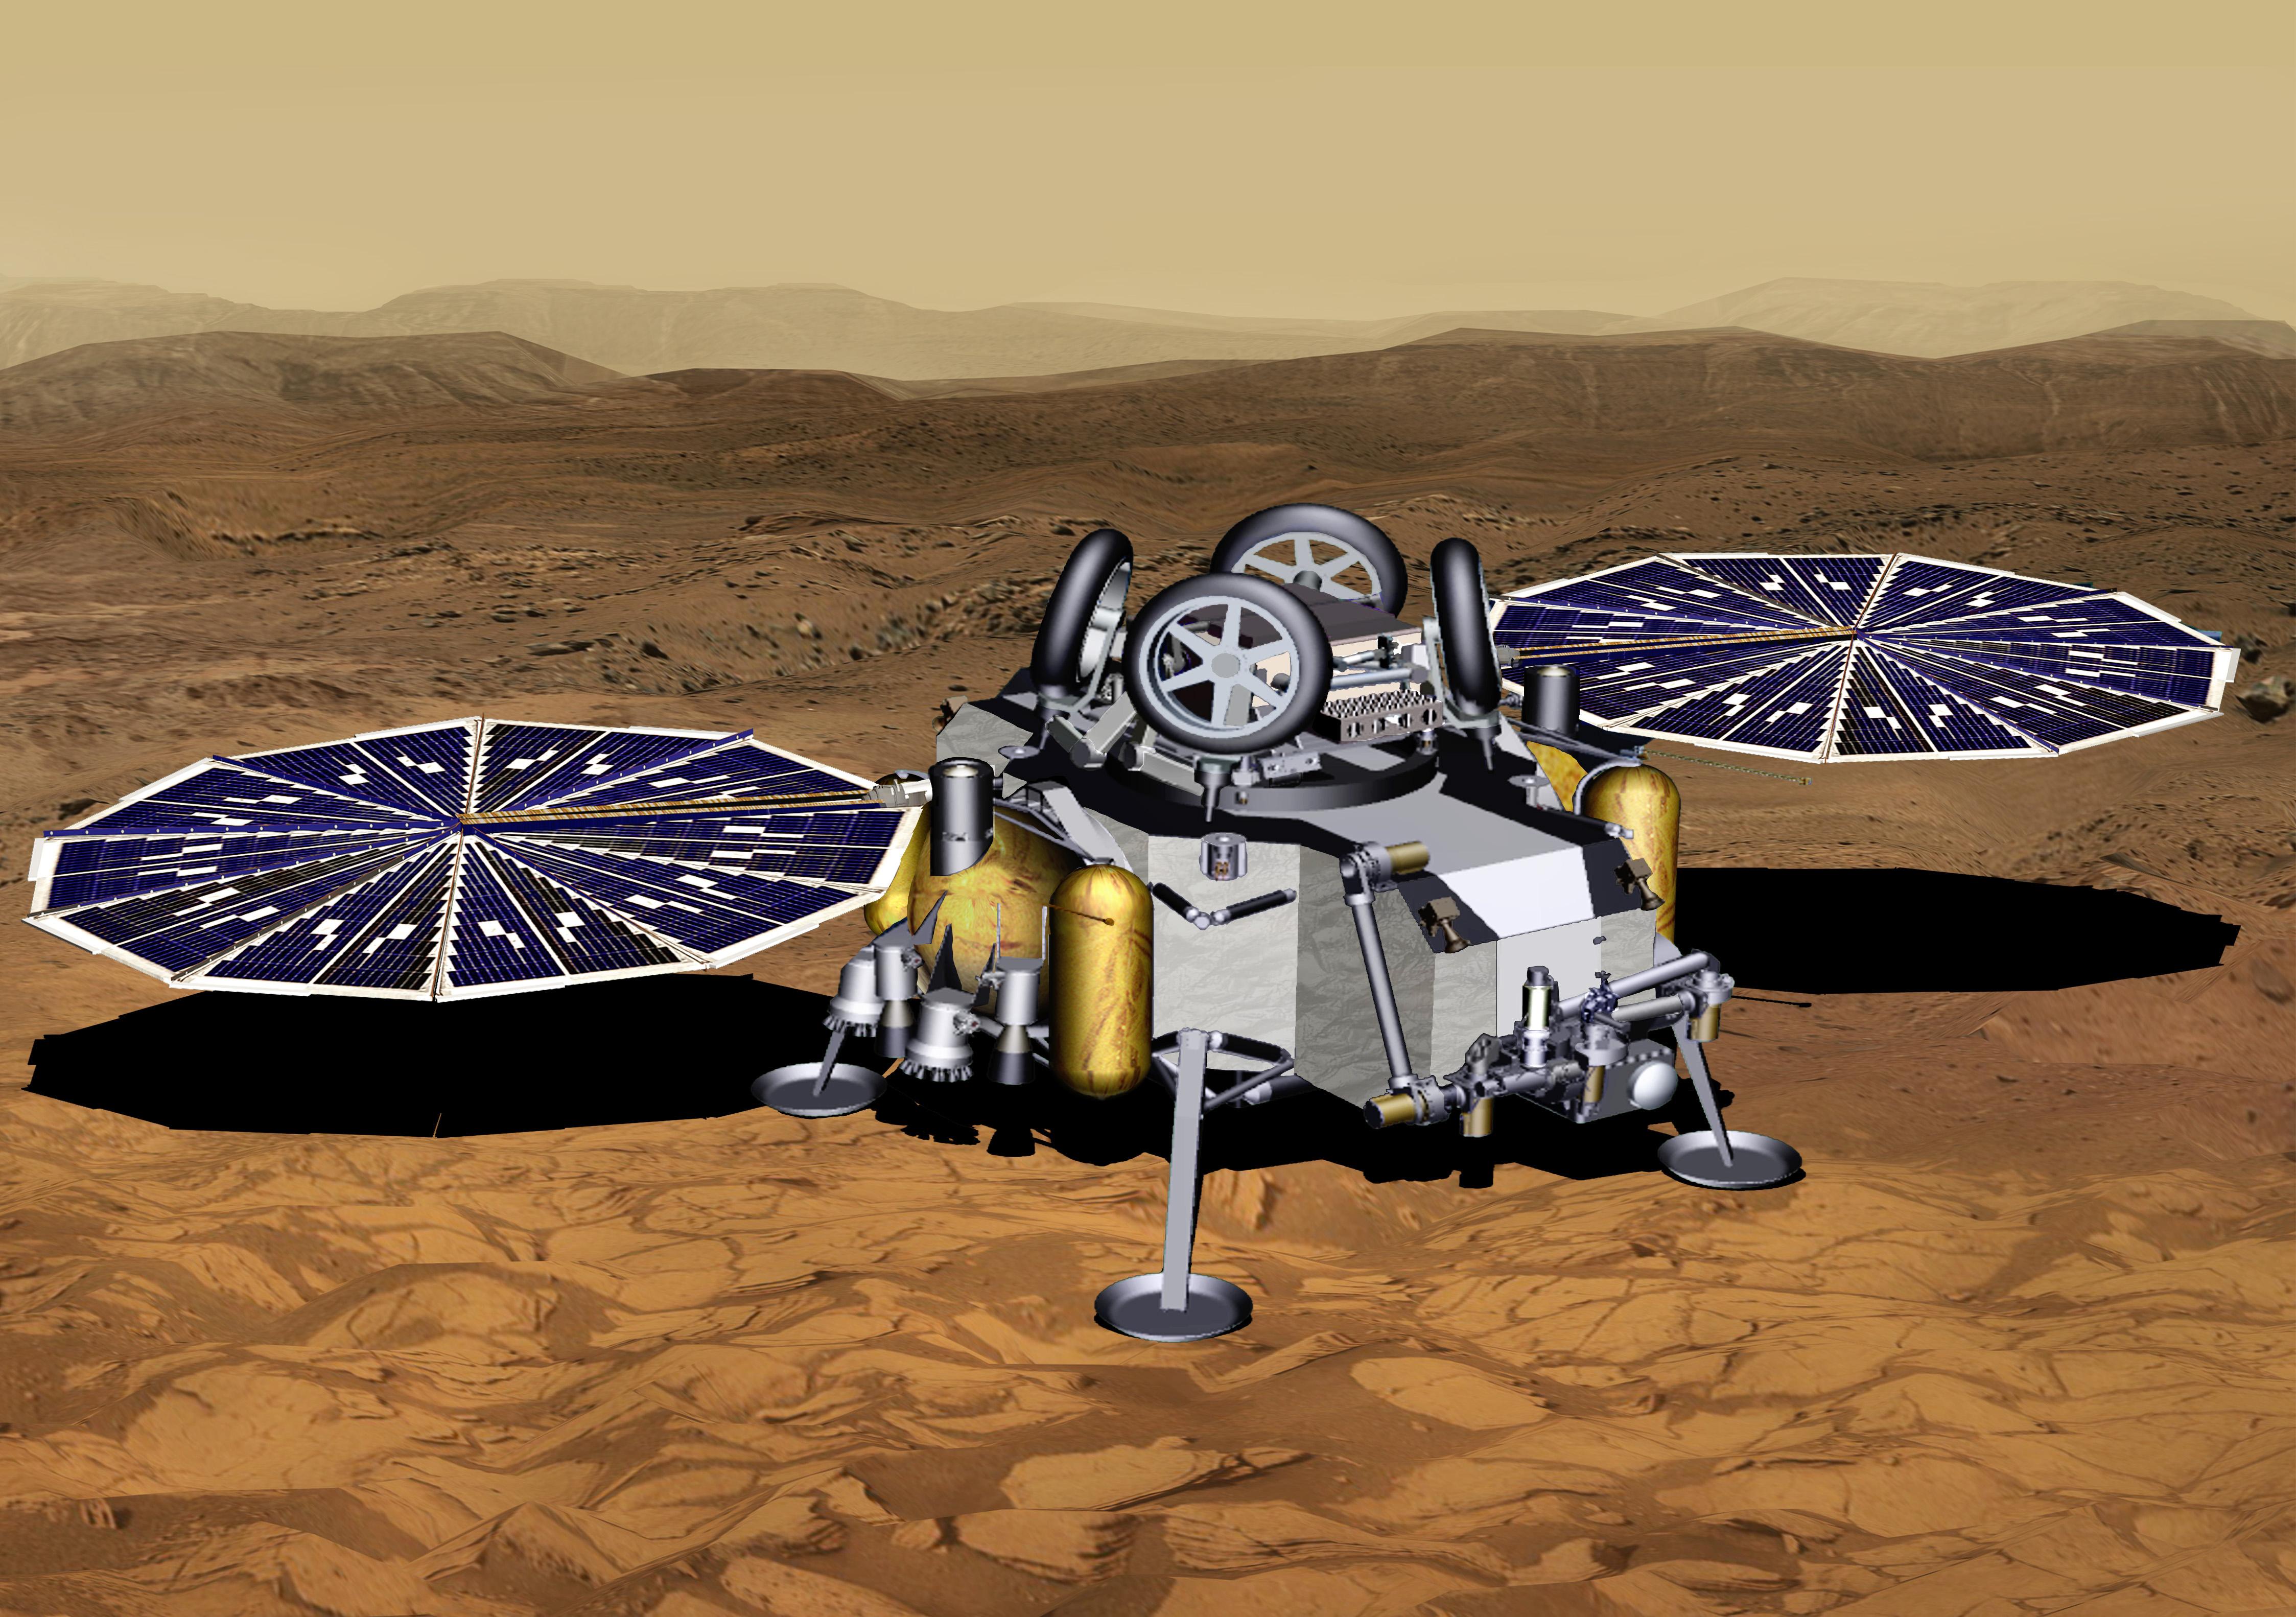 PIA23711: Mars Sample Return Lander With Solar Panels Deployed (Artist's Concept)